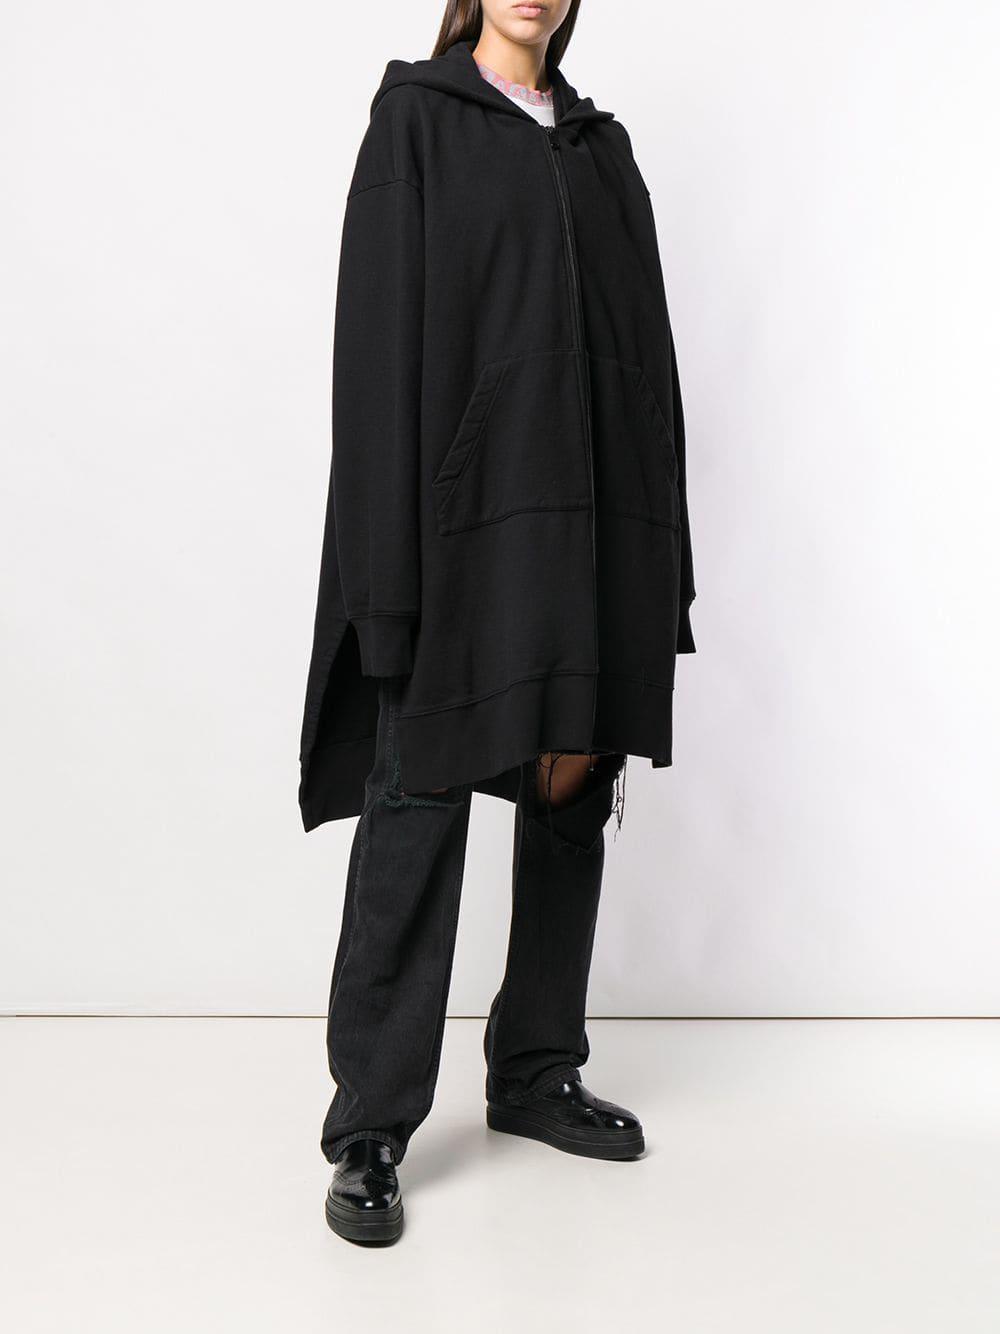 MM6 by Maison Martin Margiela Silk Oversized Zipped Hoodie in Black - Lyst